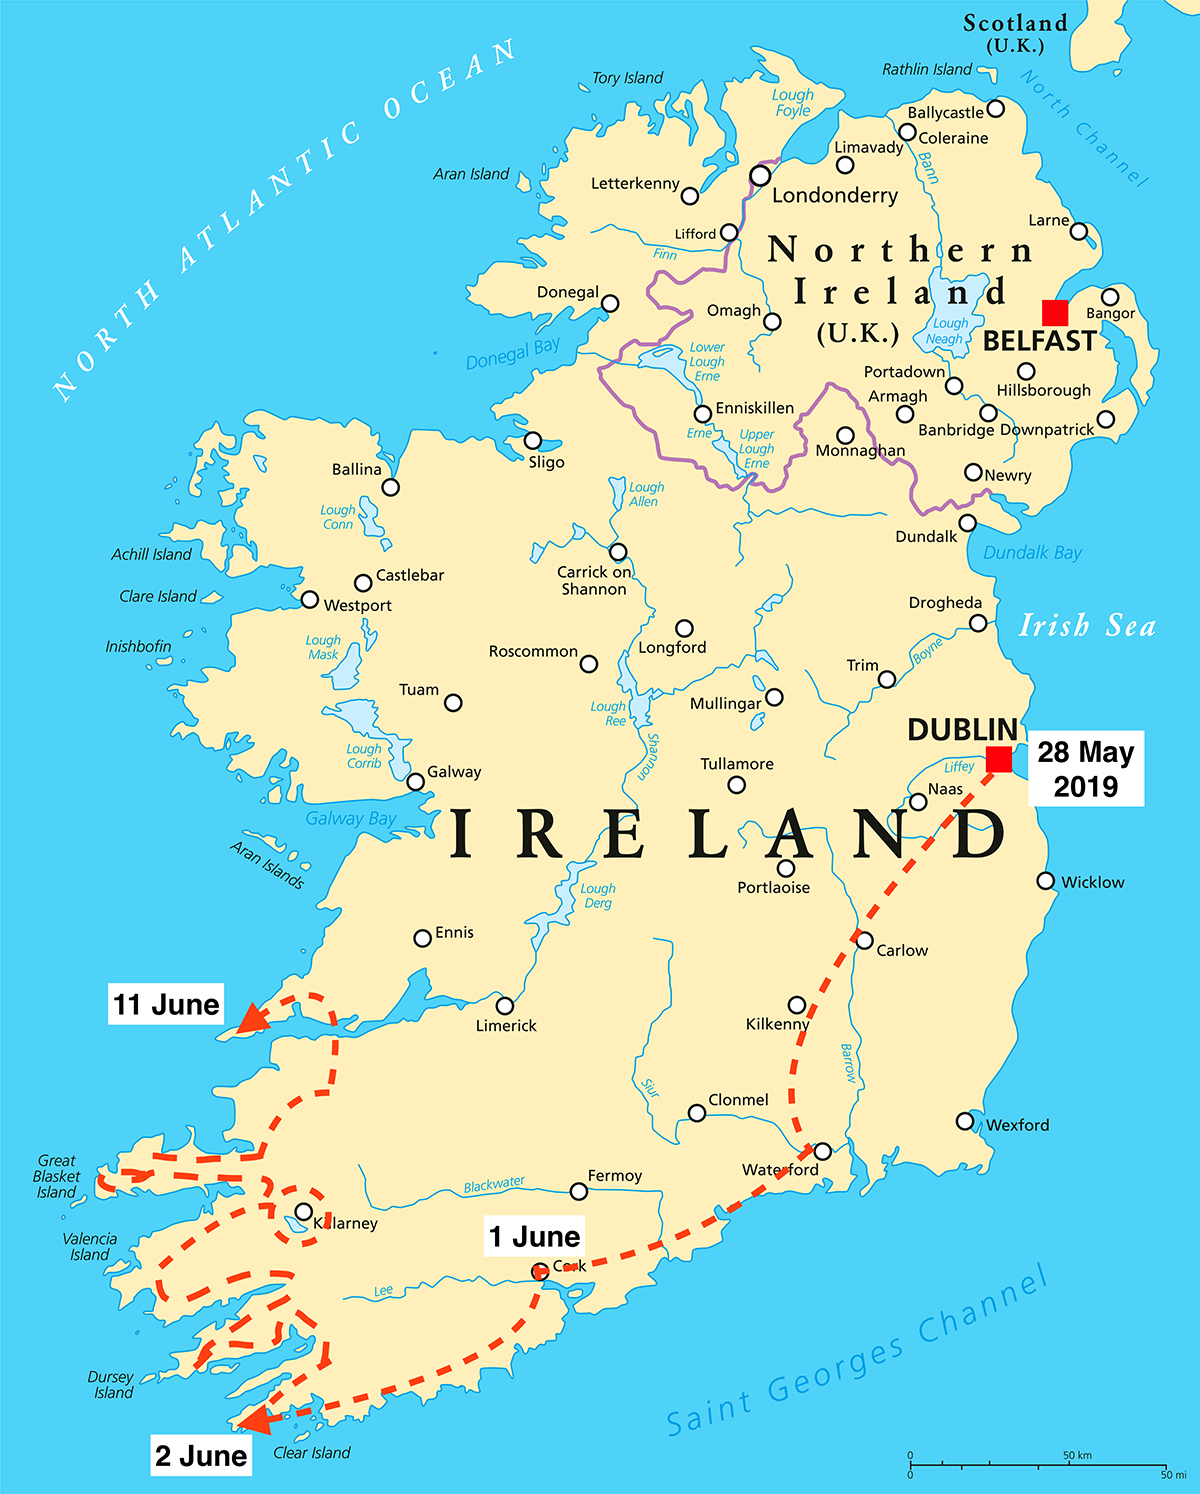 Brendan McGill's Irish Odyssey, a round-Ireland bike ride